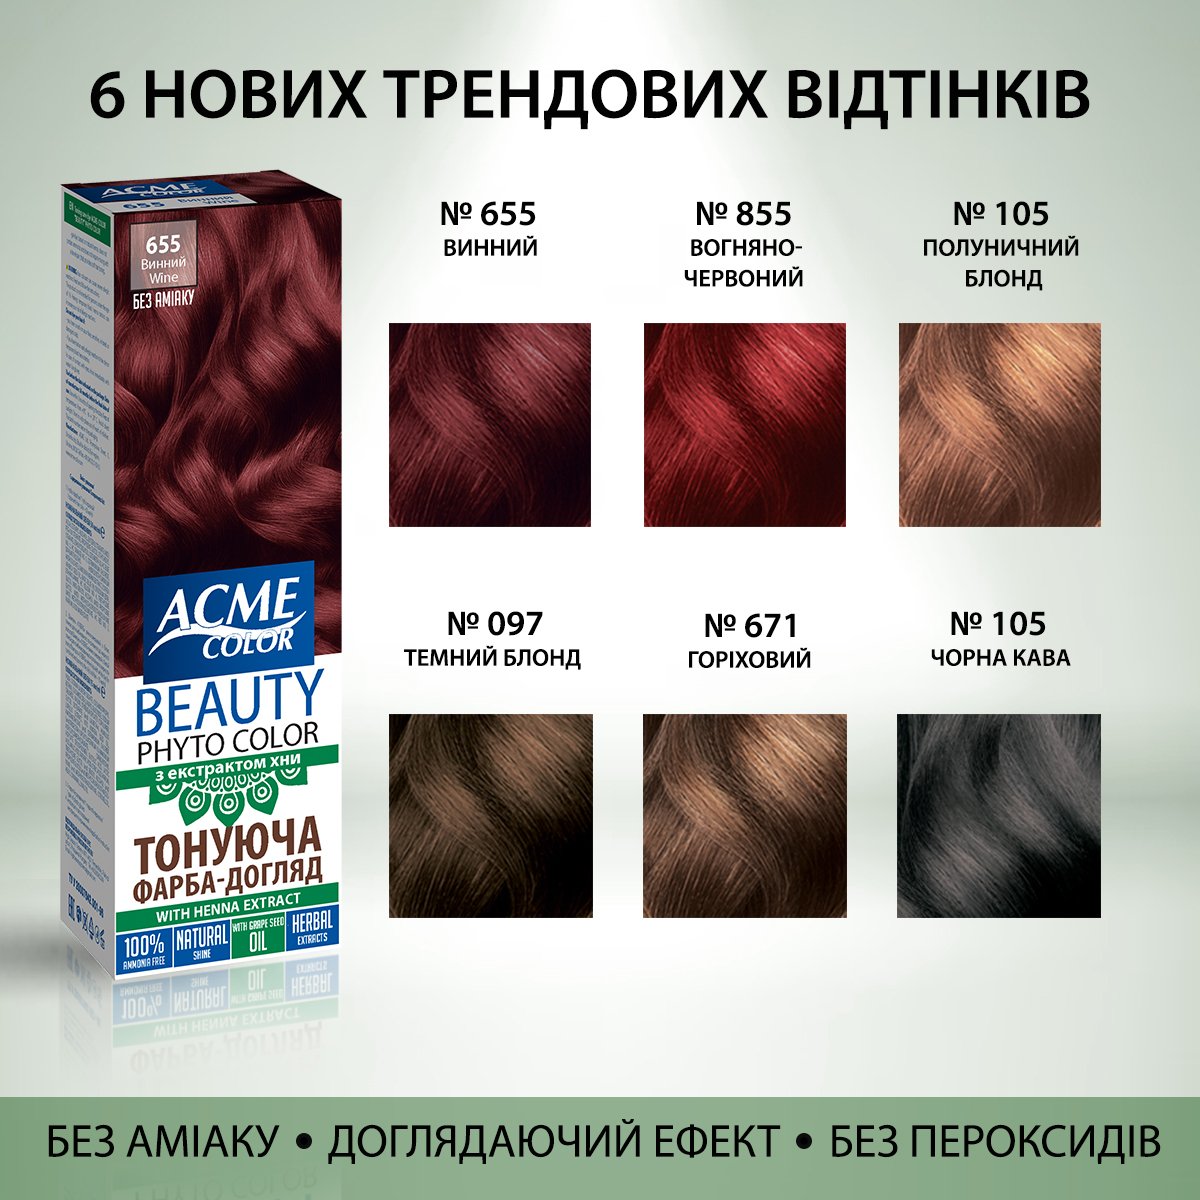 Гель-краска Acme Color Beauty Phyto Color, тон 655, винный, 60 мл - фото 5